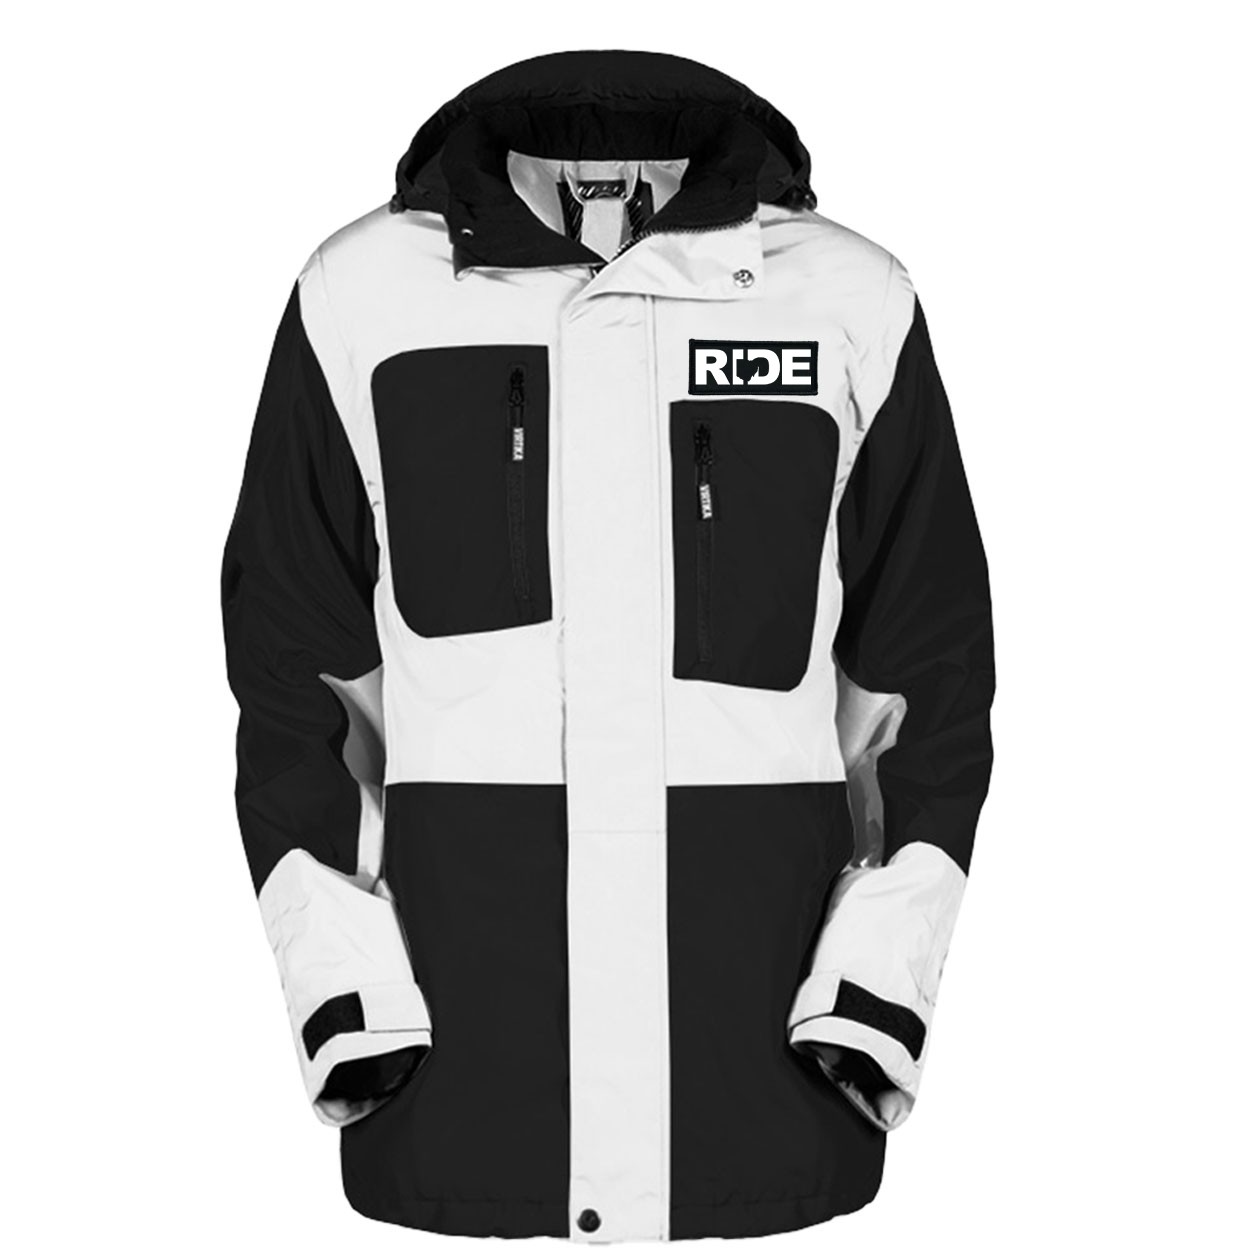 Ride Ohio Pro Waterproof Breathable Winter Virtika Jacket Black/White (White Logo)